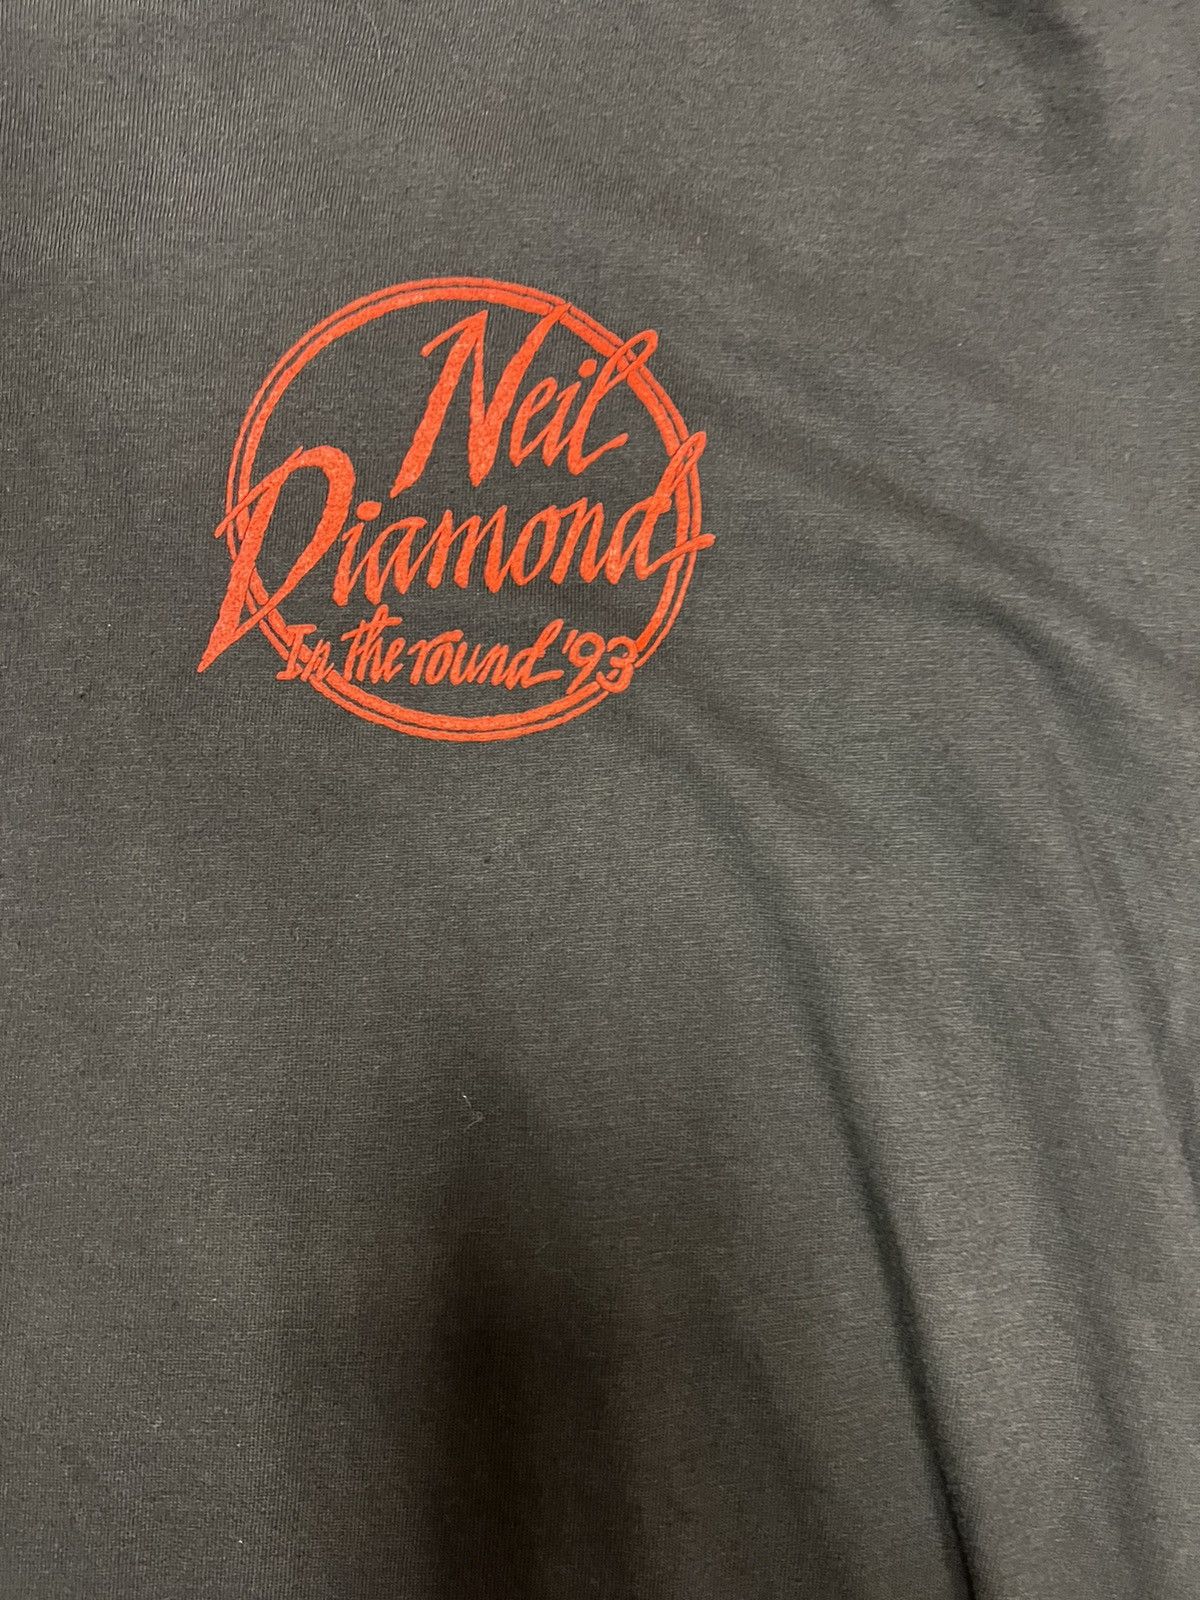 Vintage Vintage 93 Neil Diamond Tour Tshirt Size US M / EU 48-50 / 2 - 1 Preview